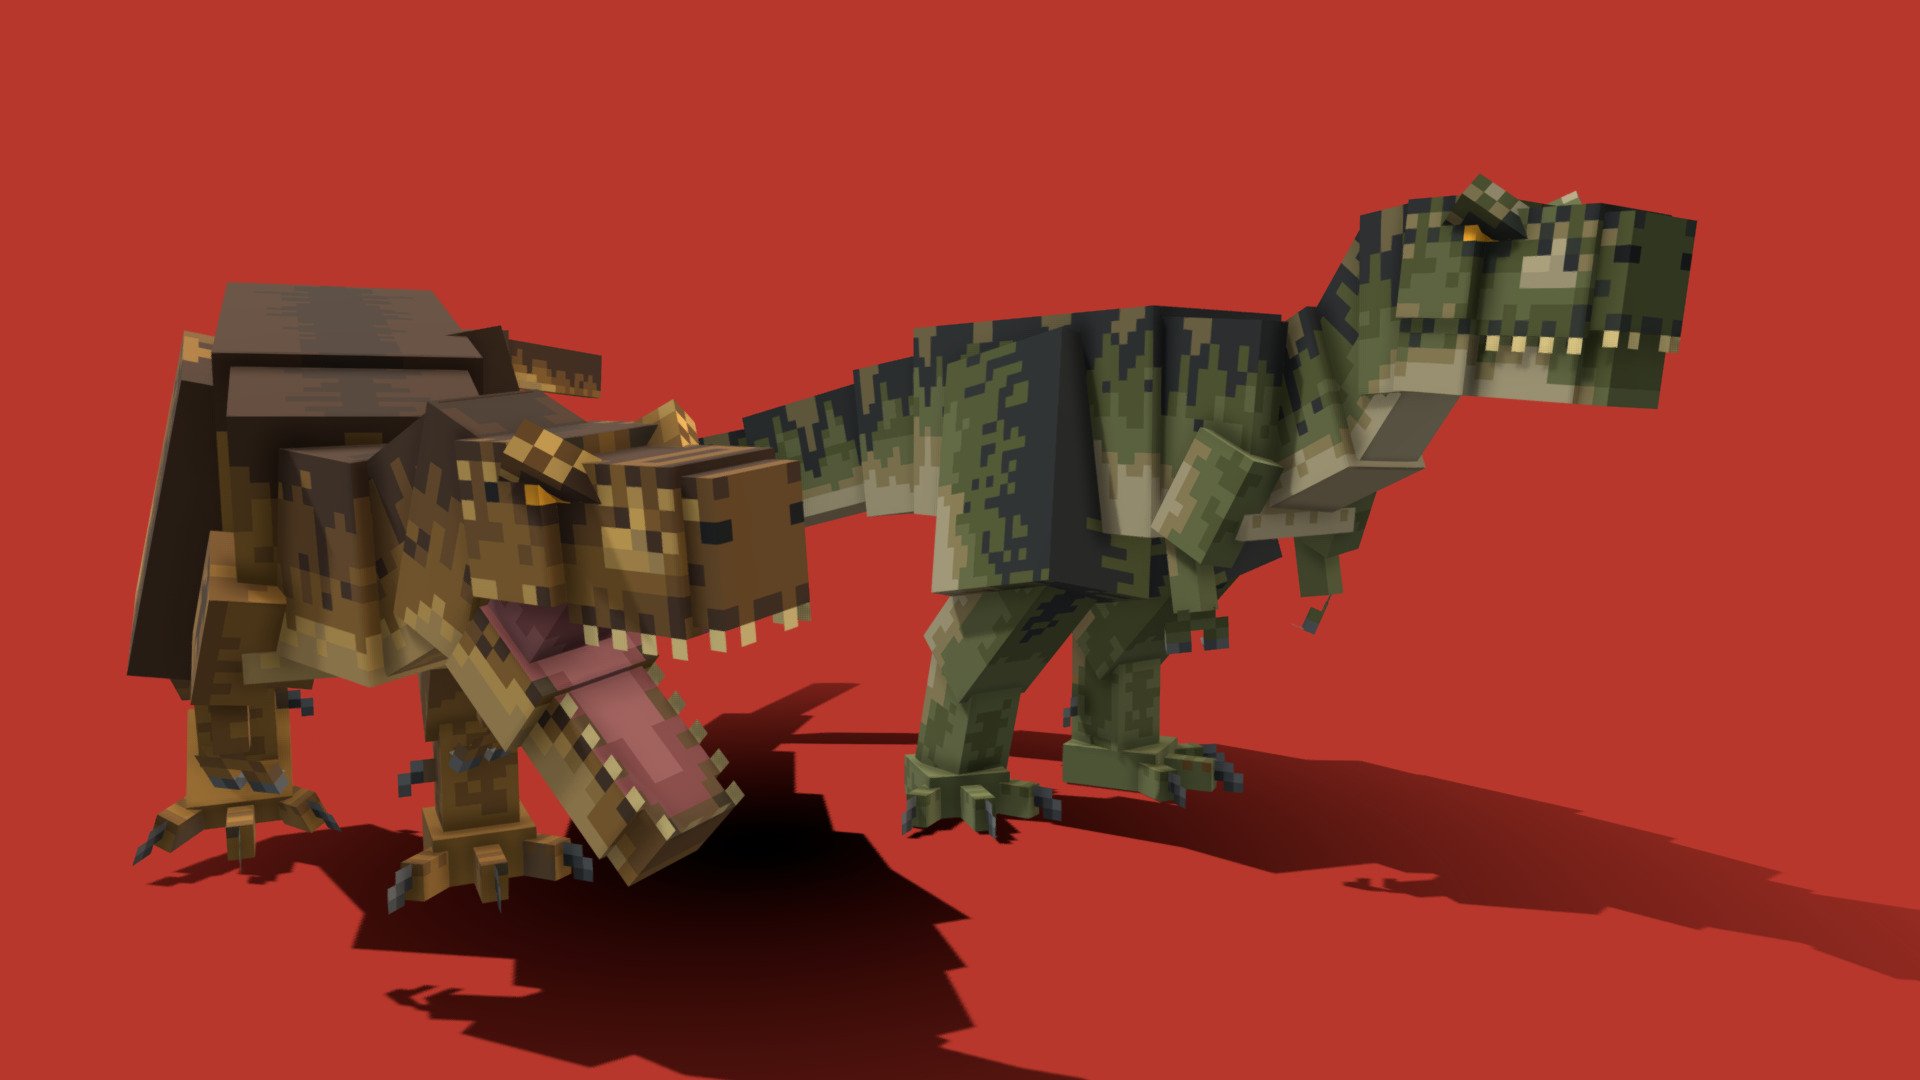 Tyrannosaurus rex (meaning &ldquo;tyrant lizard king